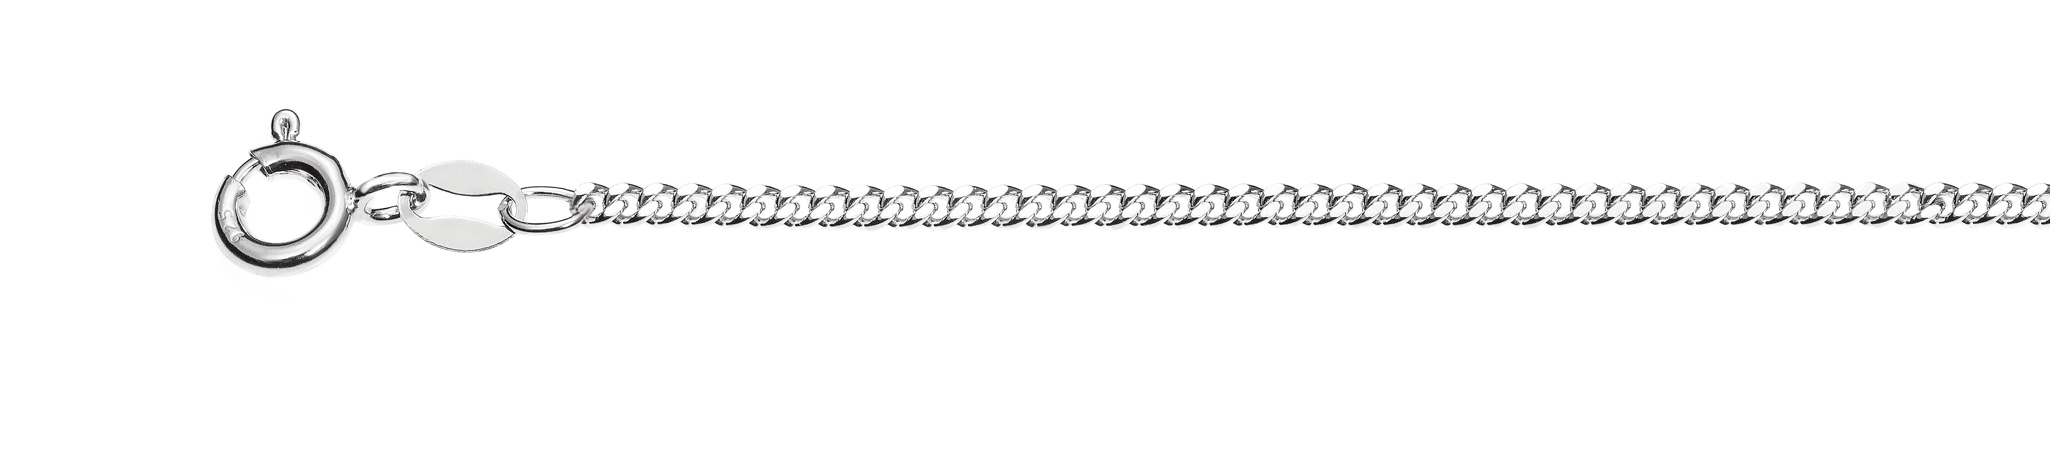 Ref.: 95560 - Diamond cut curb 0.60 - Wide 1.9